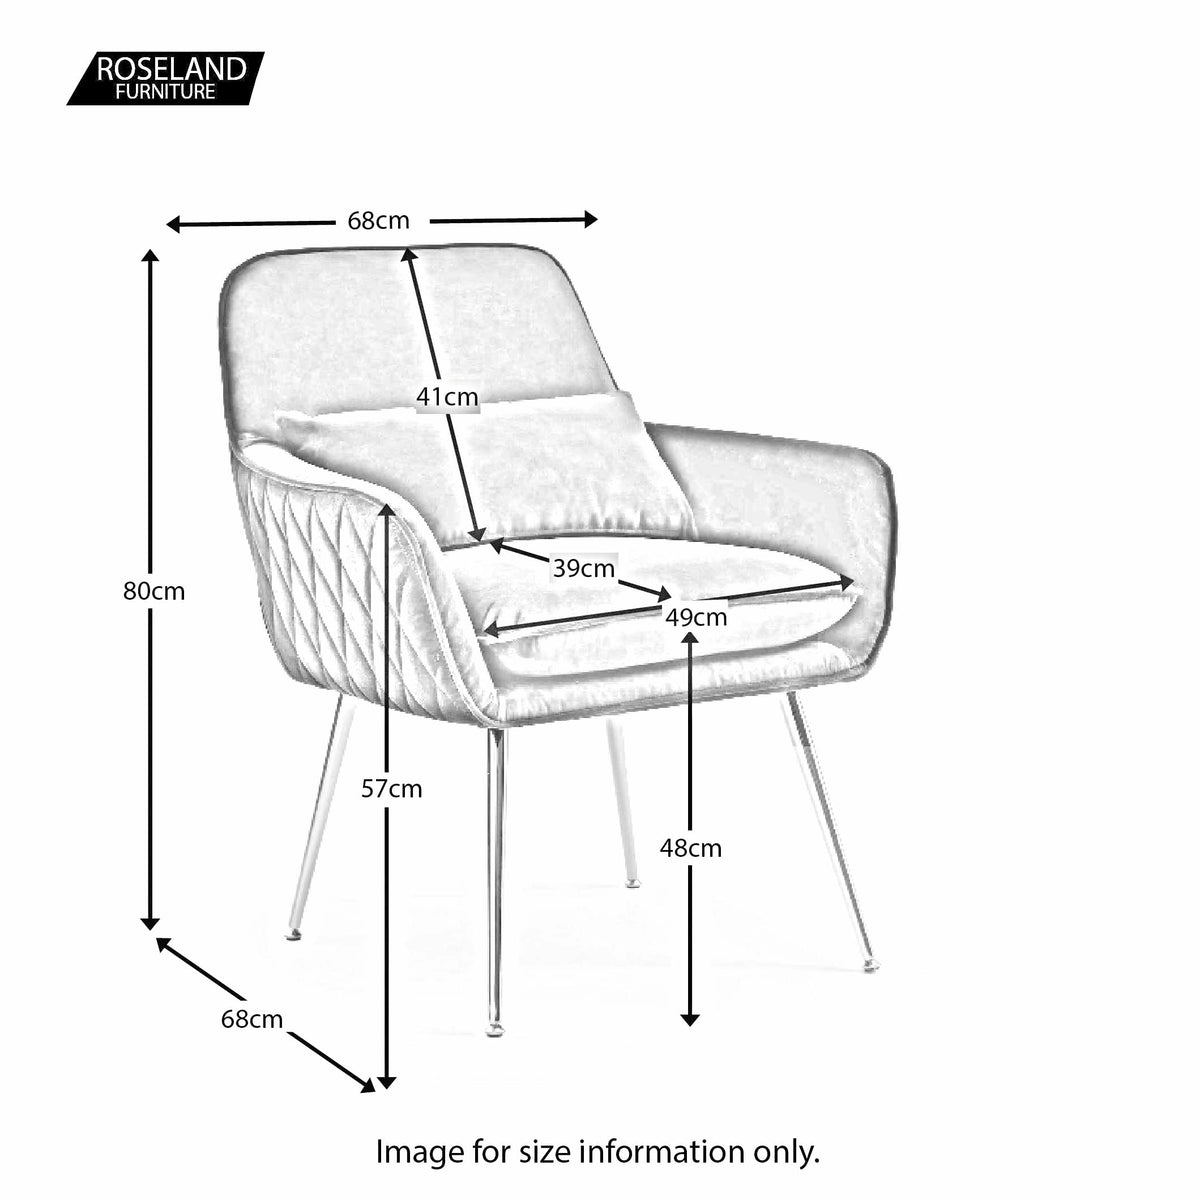 Jess Diamond Stitch Accent Chair - Size Guide